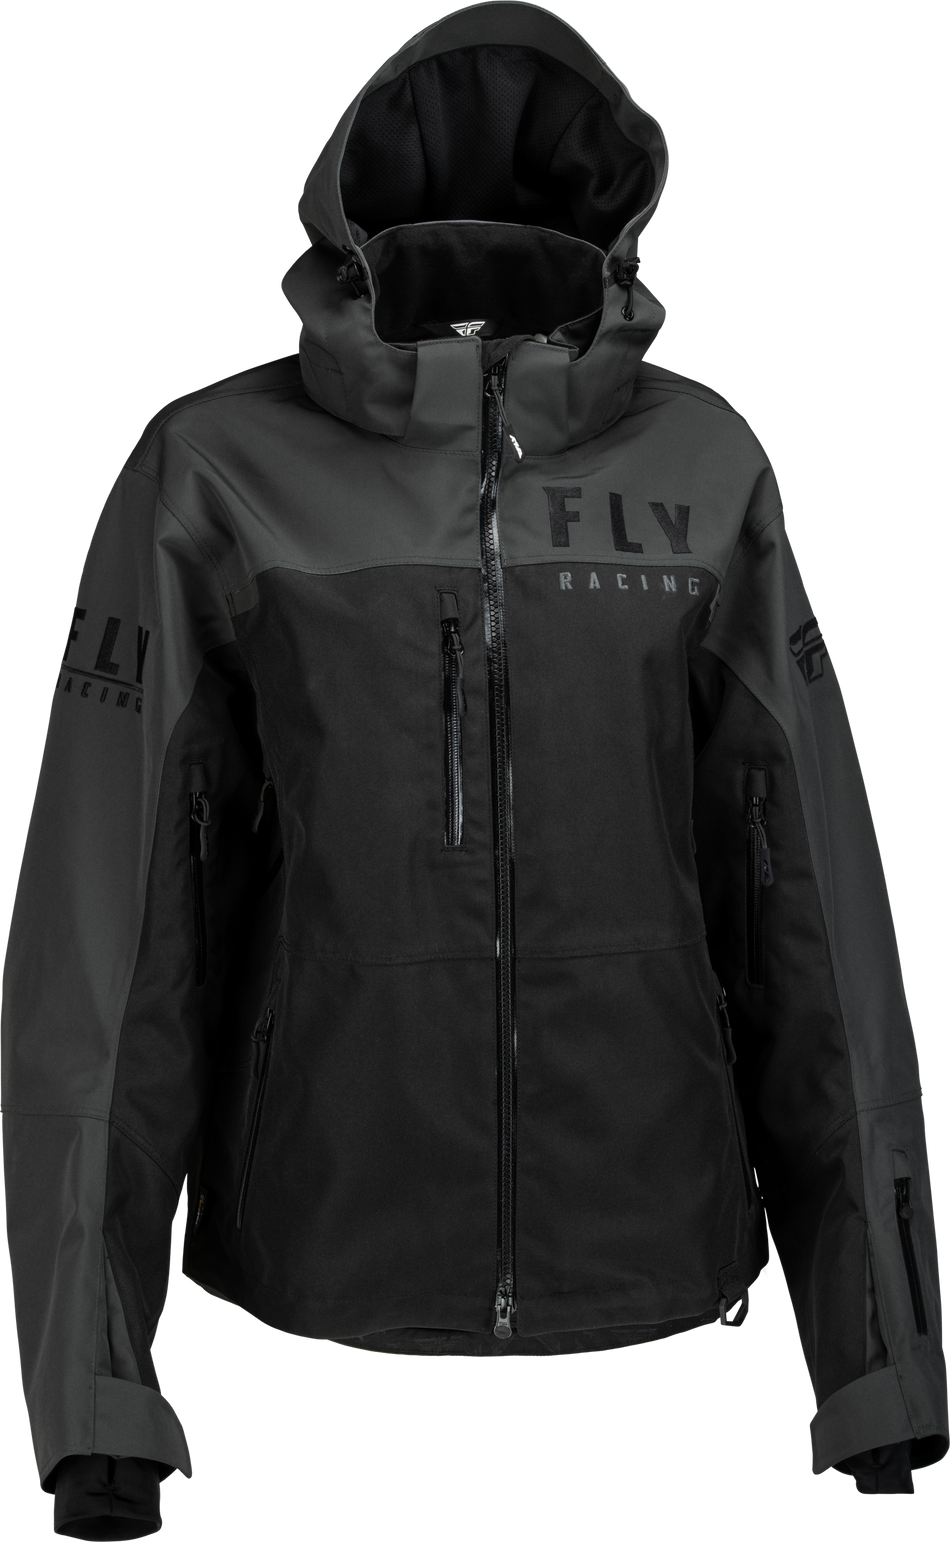 FLY RACING Women's Carbon Jacket Black/Grey Lg 470-4500L